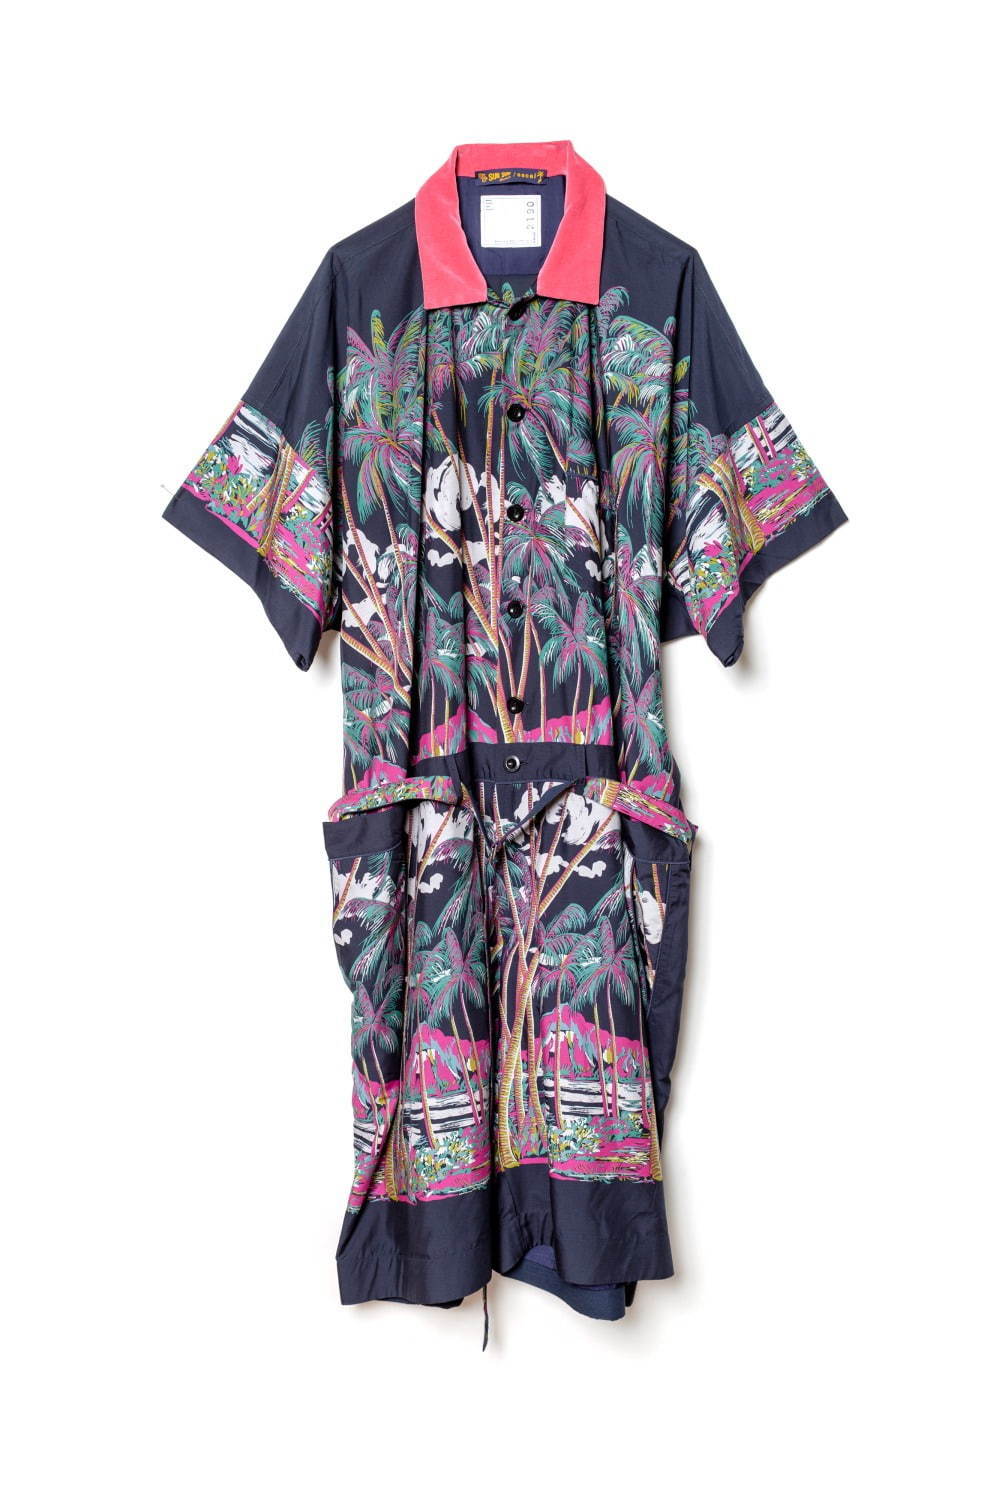 sacai“ヴィンテージアロハ柄”のMA-1やドレス、日本発サンサーフと